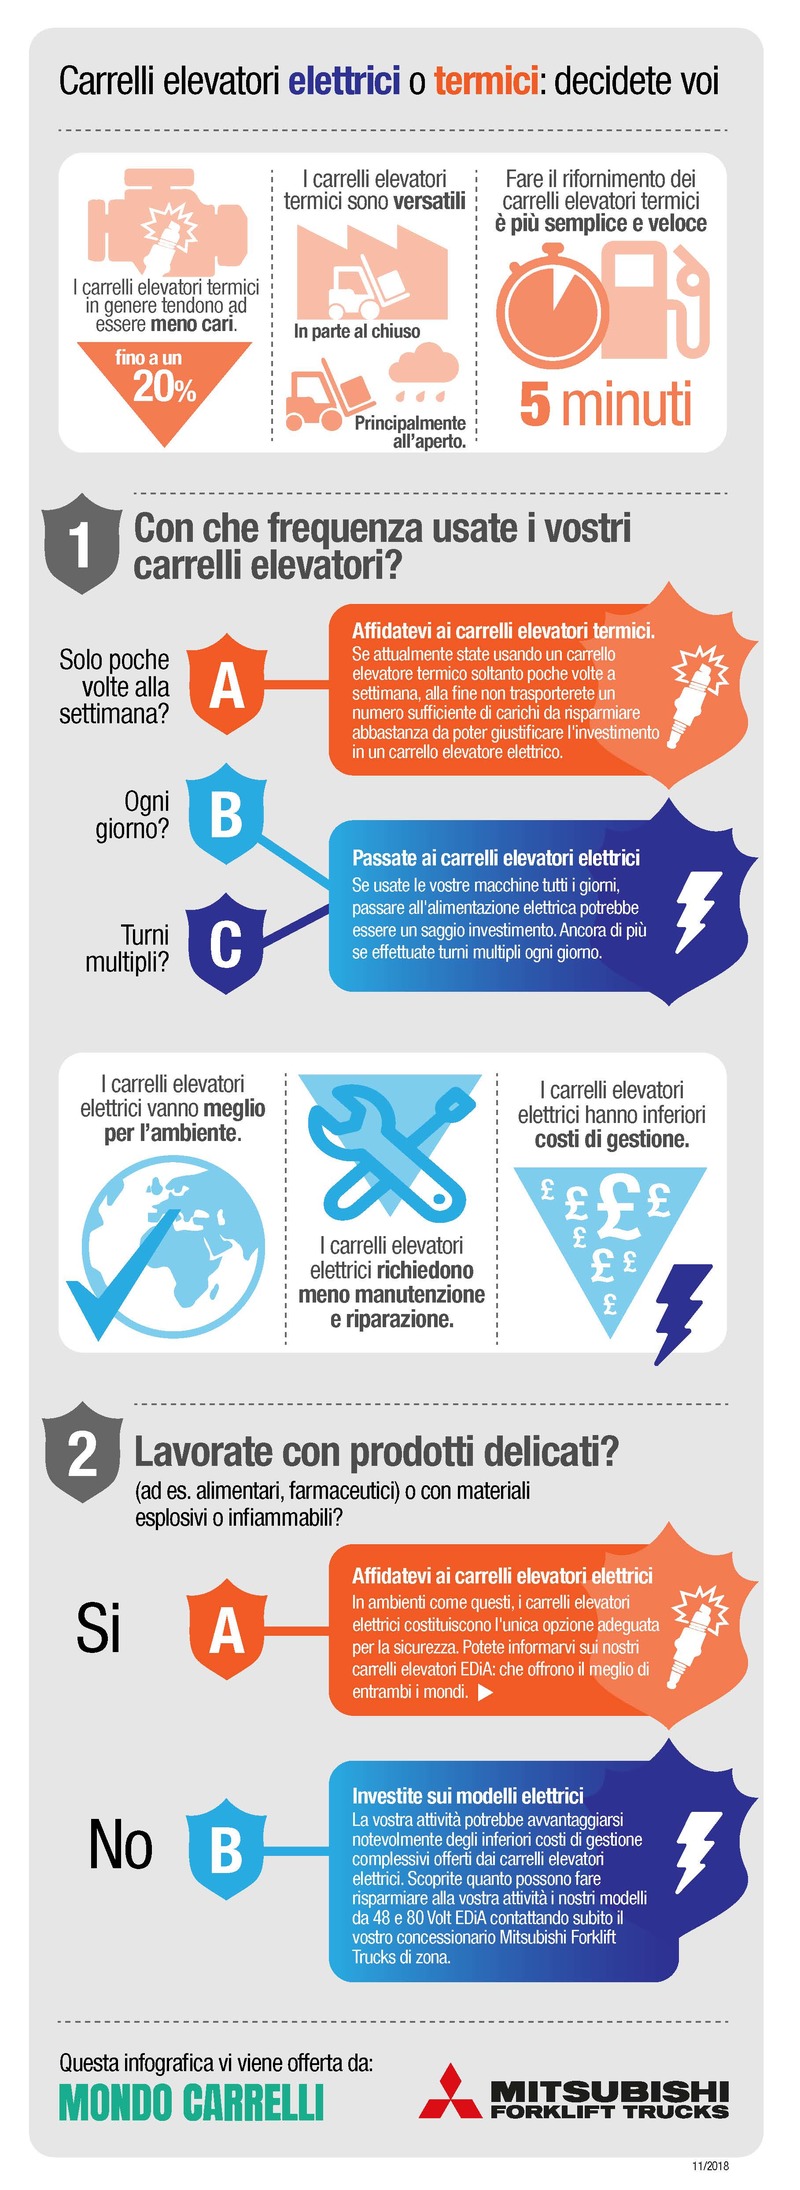 icve-infographic-italian-proof3.jpg